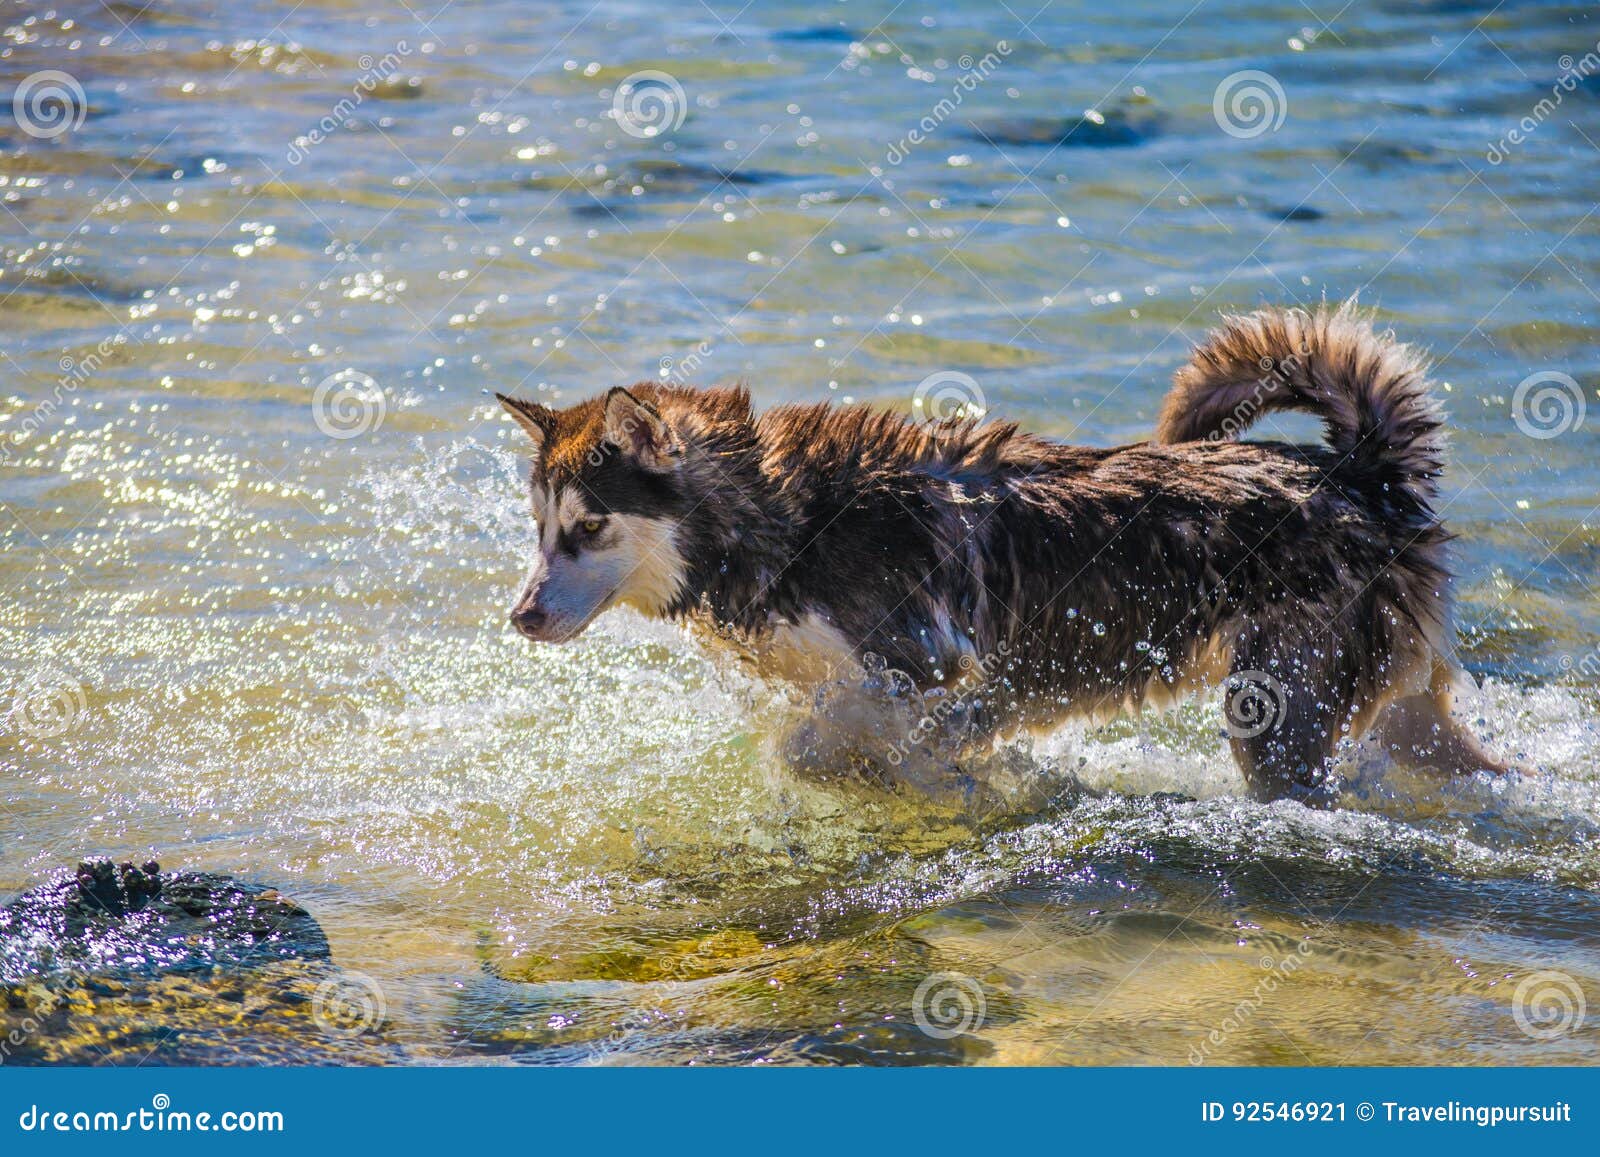 siberian husky puppy swimming on the shore sea splashing water